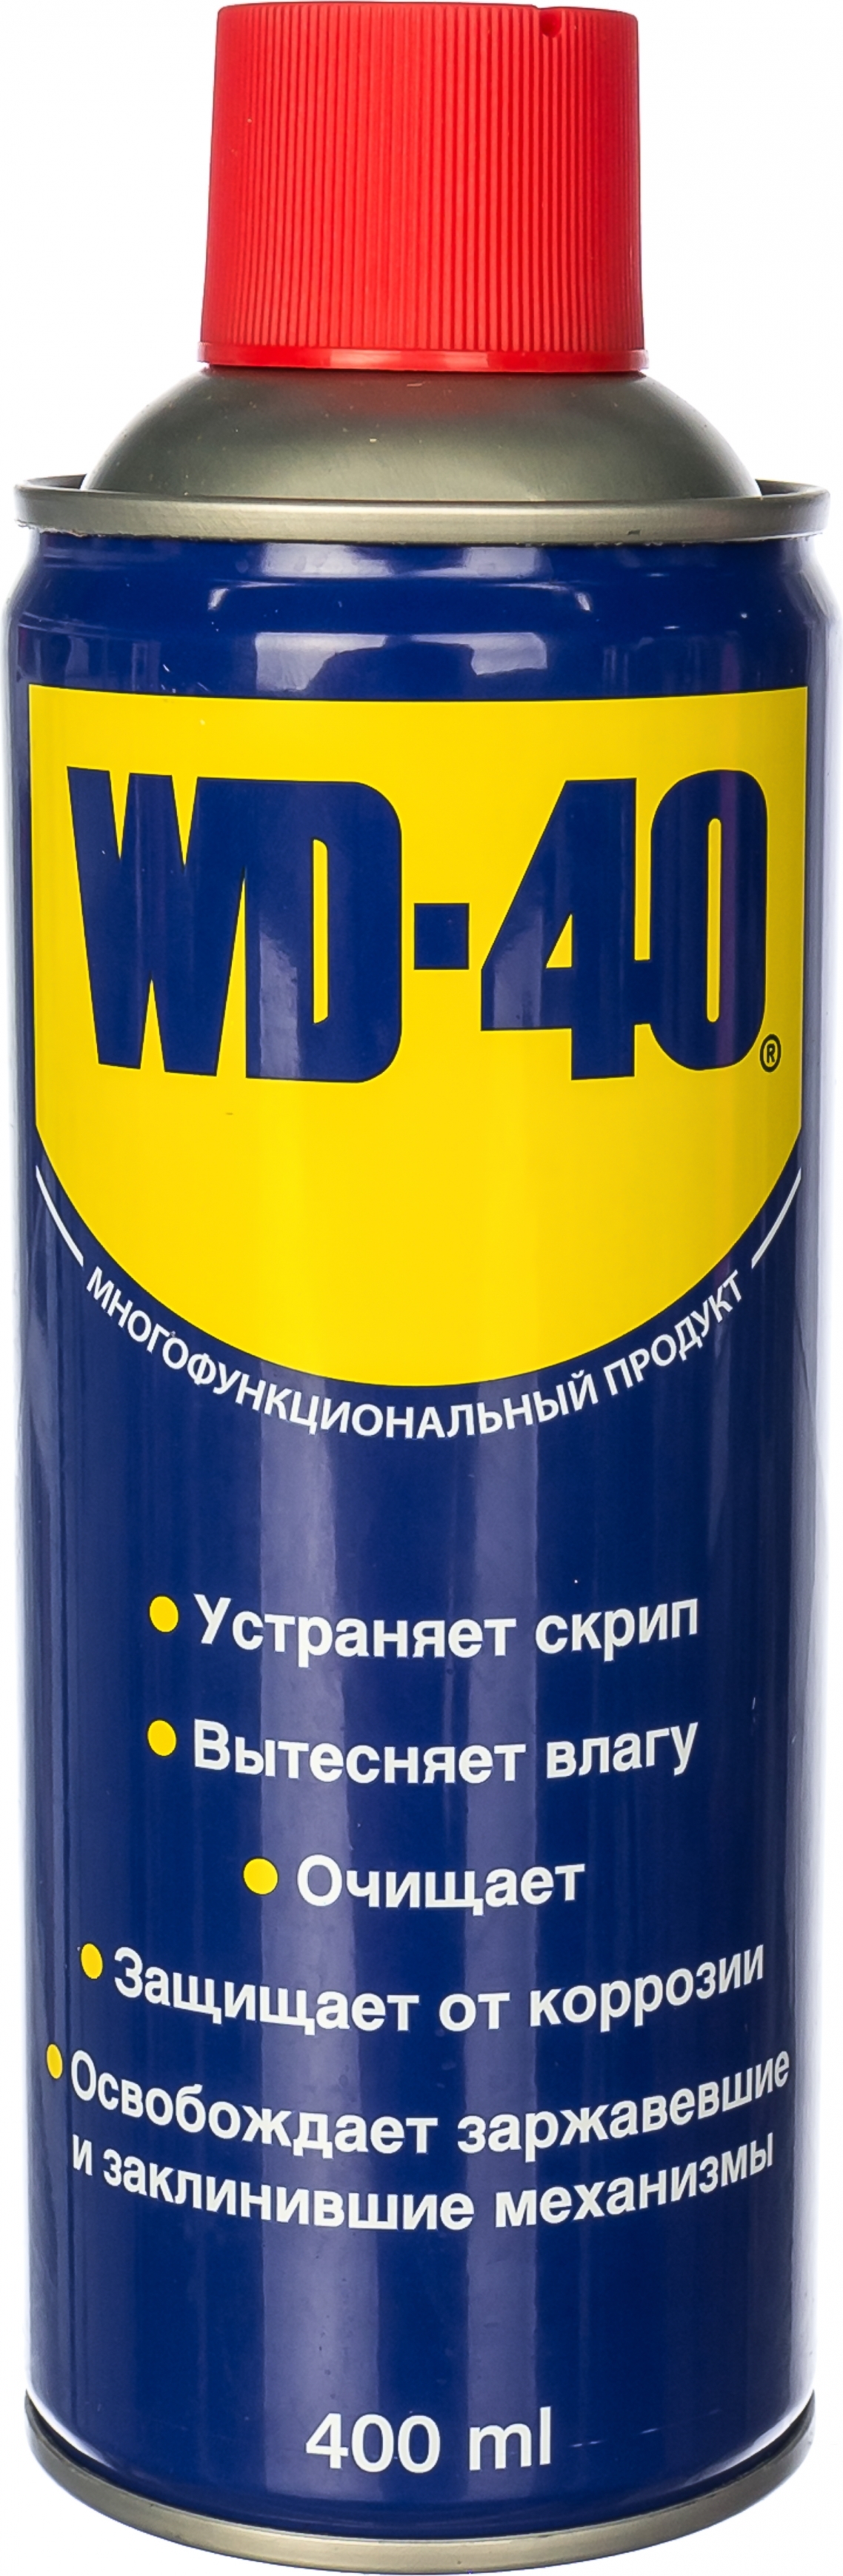 Смазка универсальная WD-40 400 мл